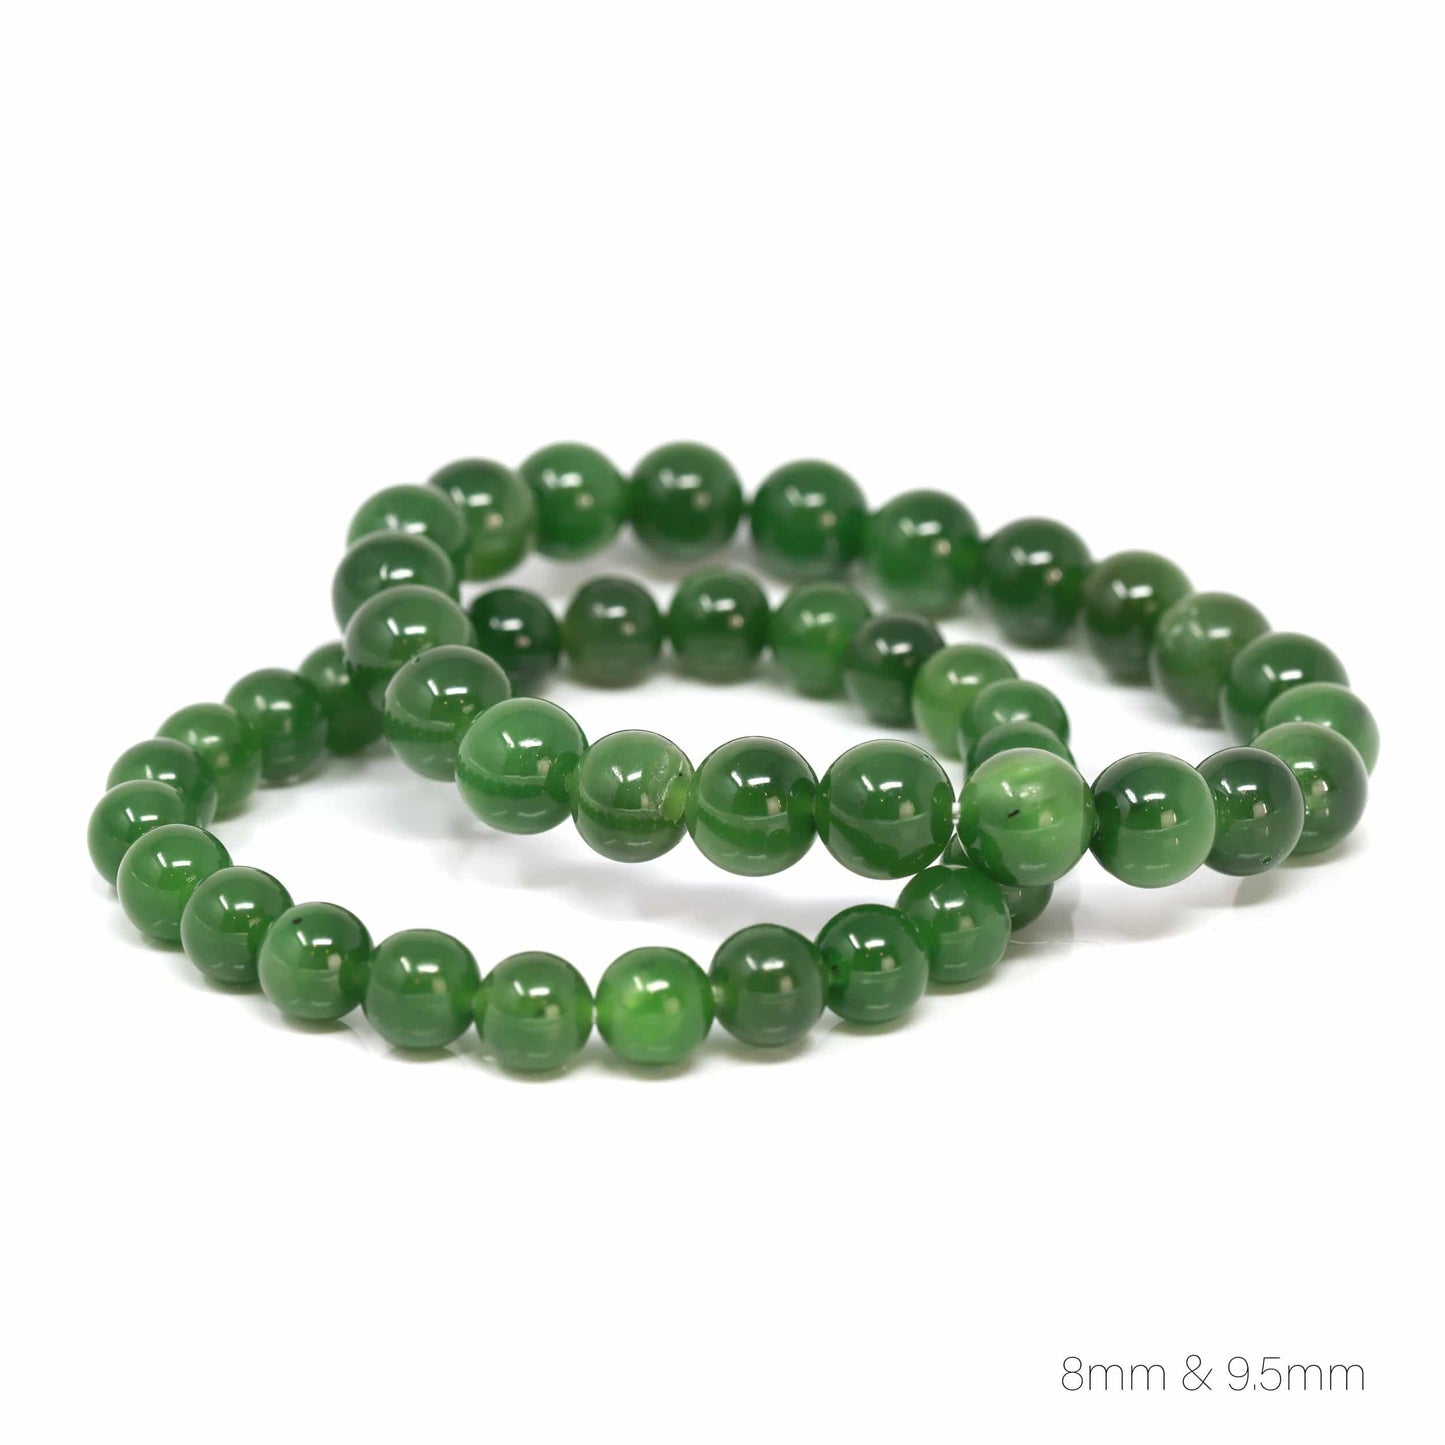 RealJade® Genuine Green Jade Round Beads Bracelet Bangle ( 9.5 mm )